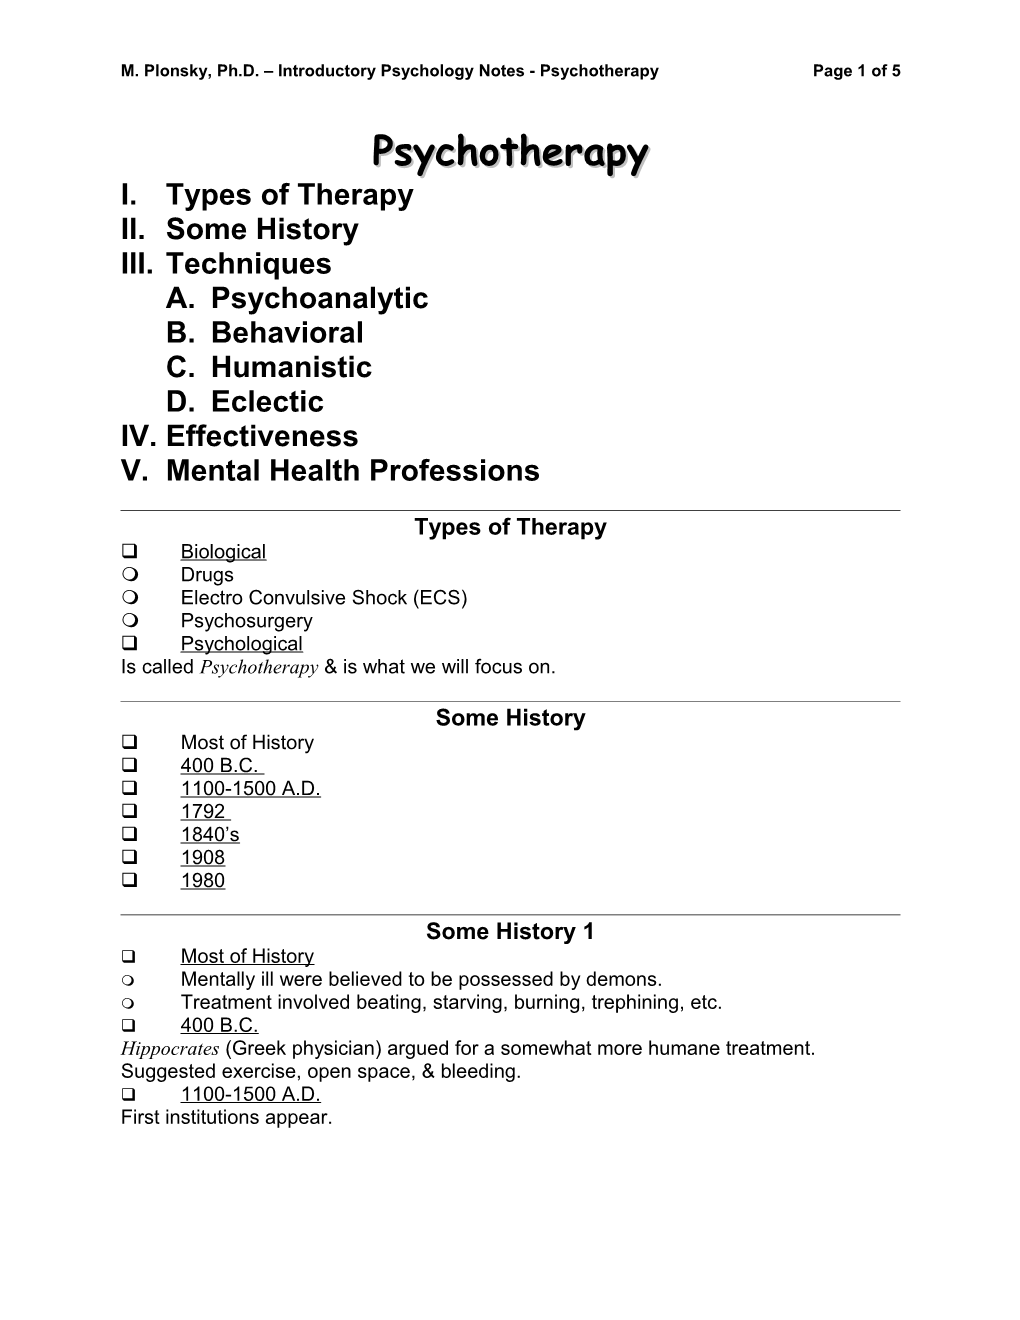 M. Plonsky, Ph.D. Introductory Psychology Notes - Psychotherapypage 1 of 5